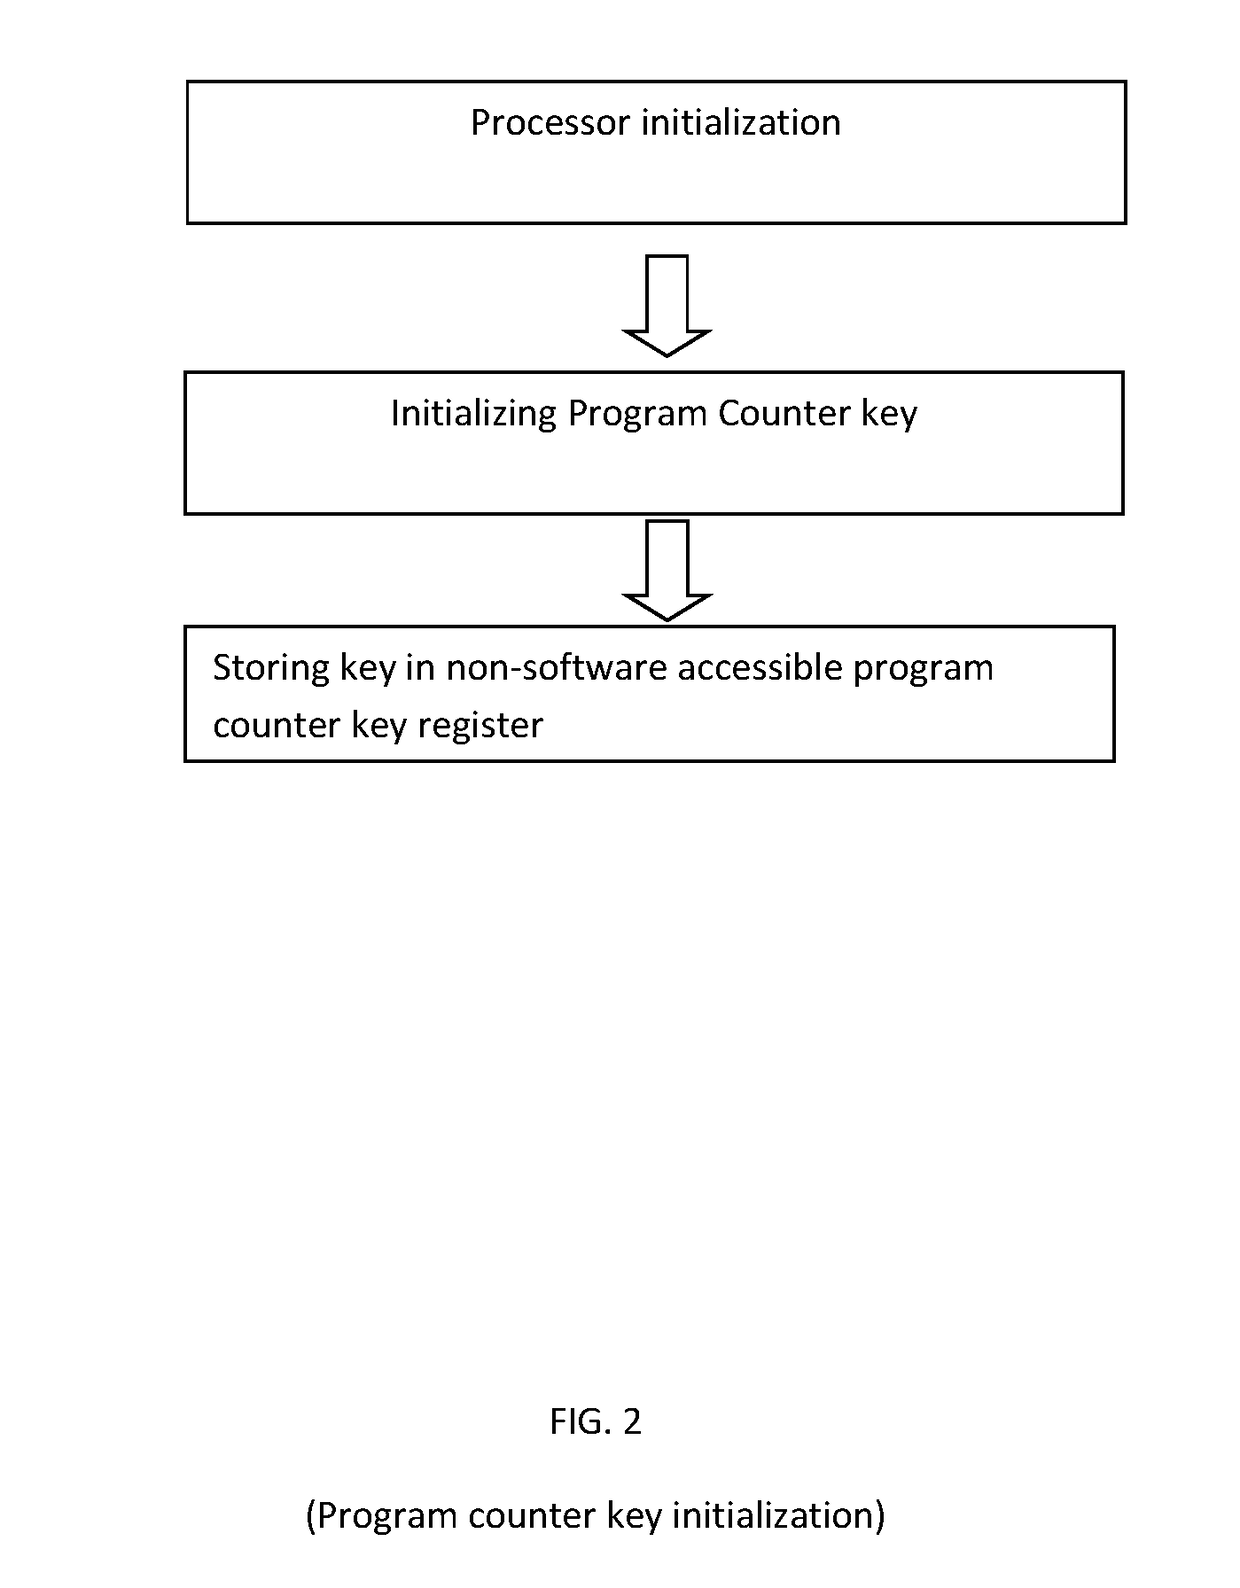 System for program counter encryption